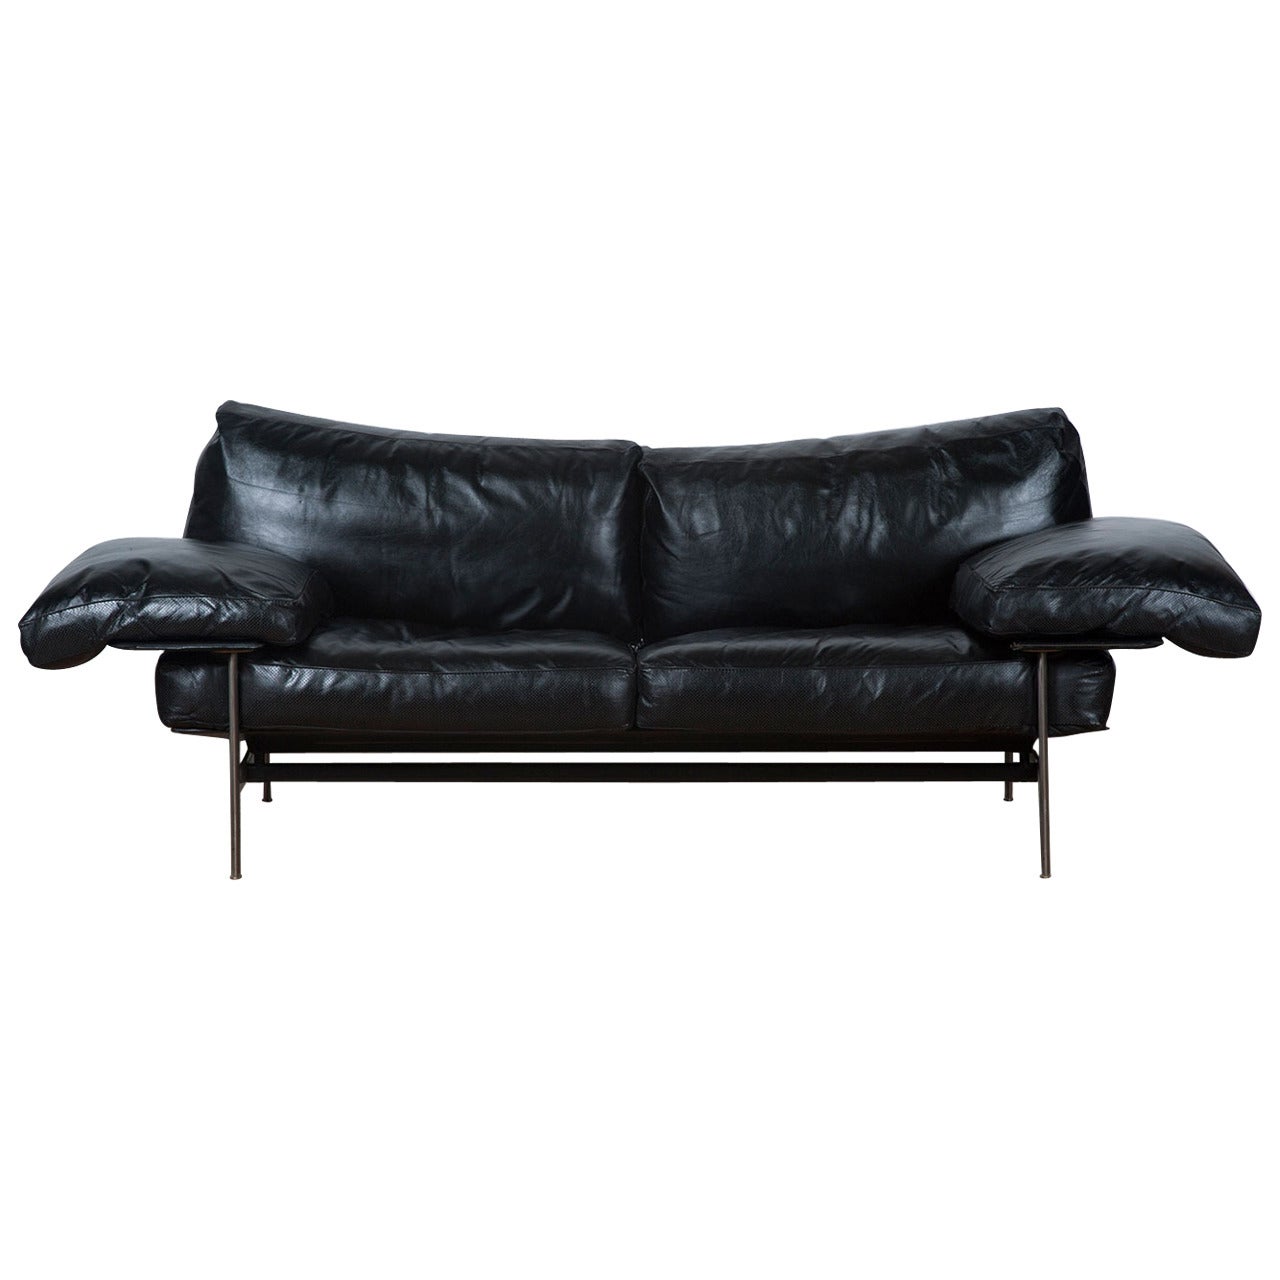 1970s Black Leather 'Diesis' Sofa by Antonio Citterio for B&B Italia